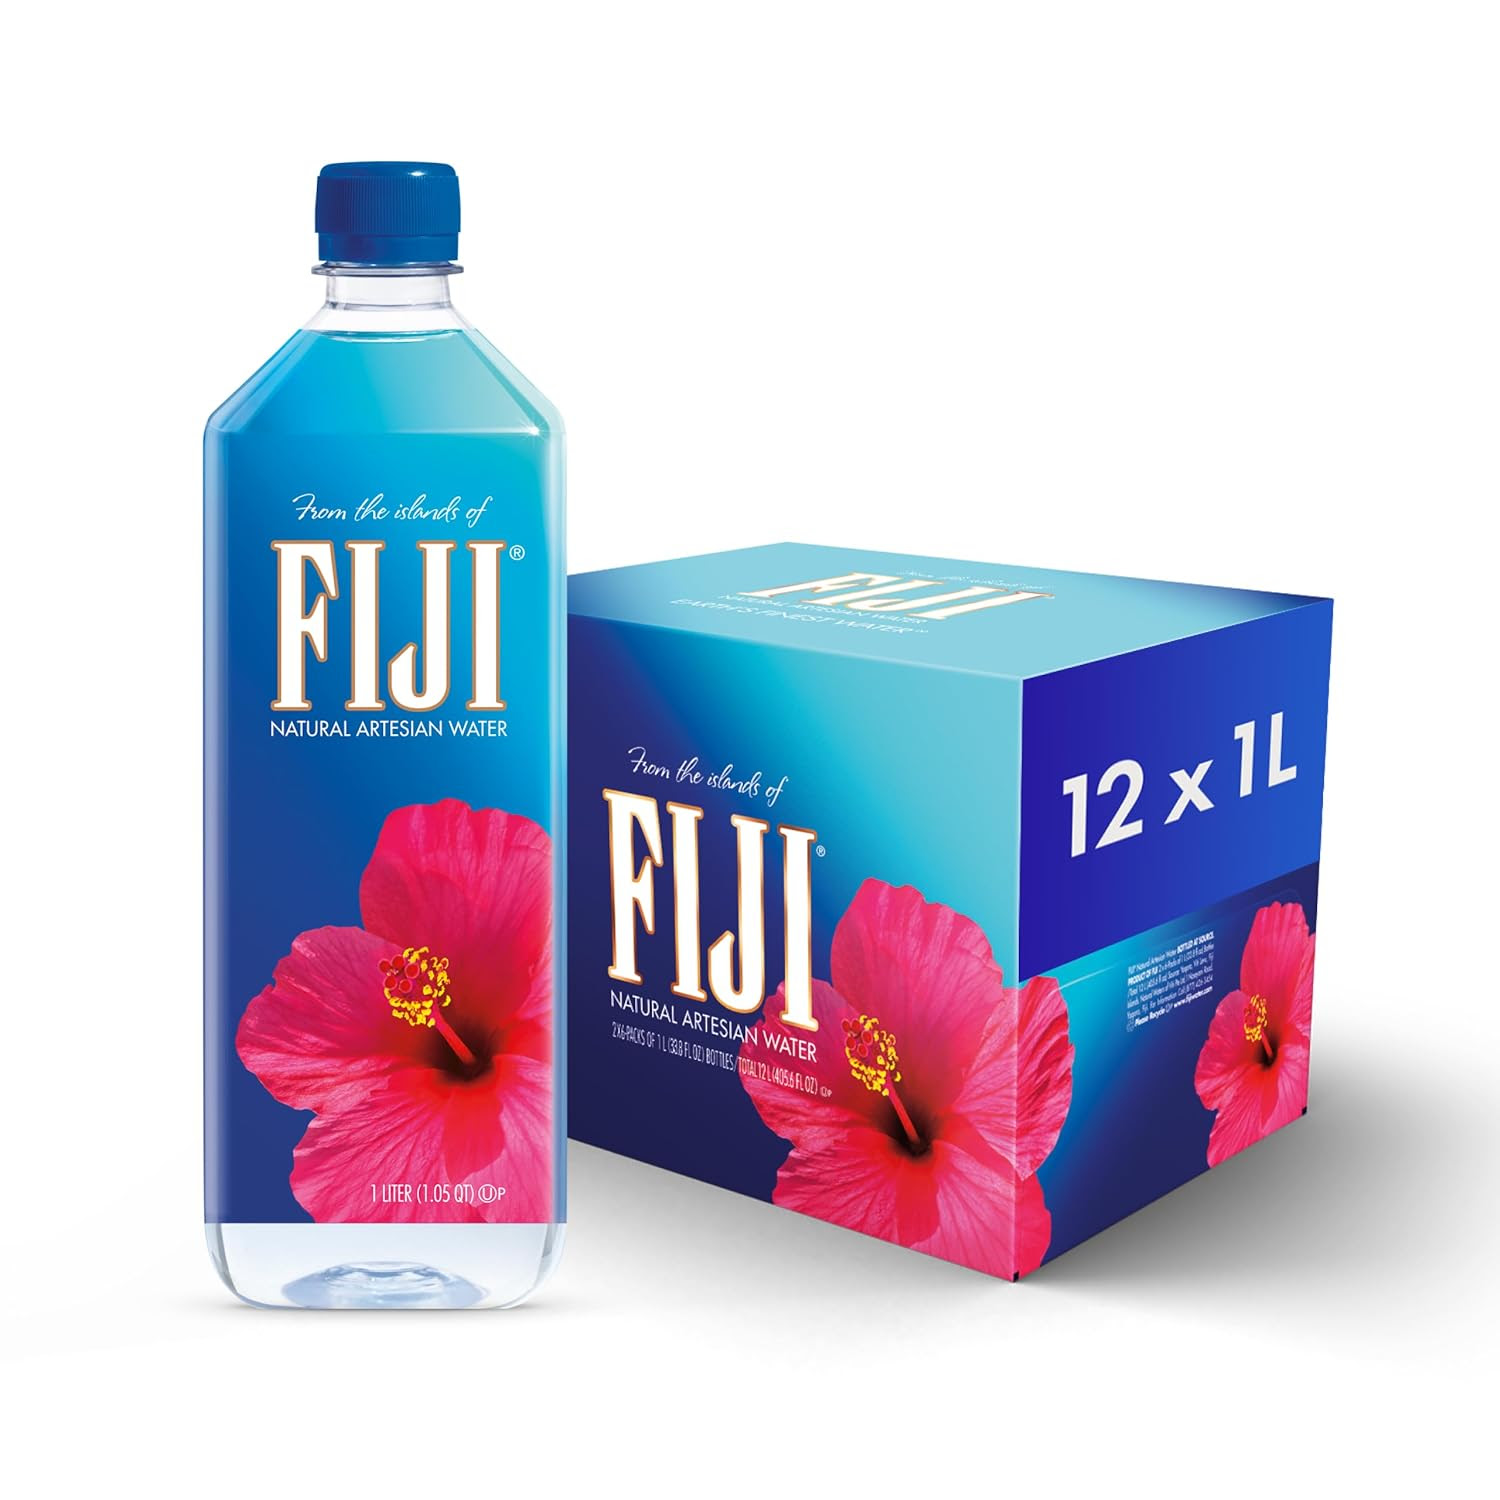 FIJI 12Pack 1 Liter 3.8 Fl oz ( 1 Liter) Natural Artesian Bottled Water.  6000 Cases. EXW Los Angeles $14.00/Case of 12.